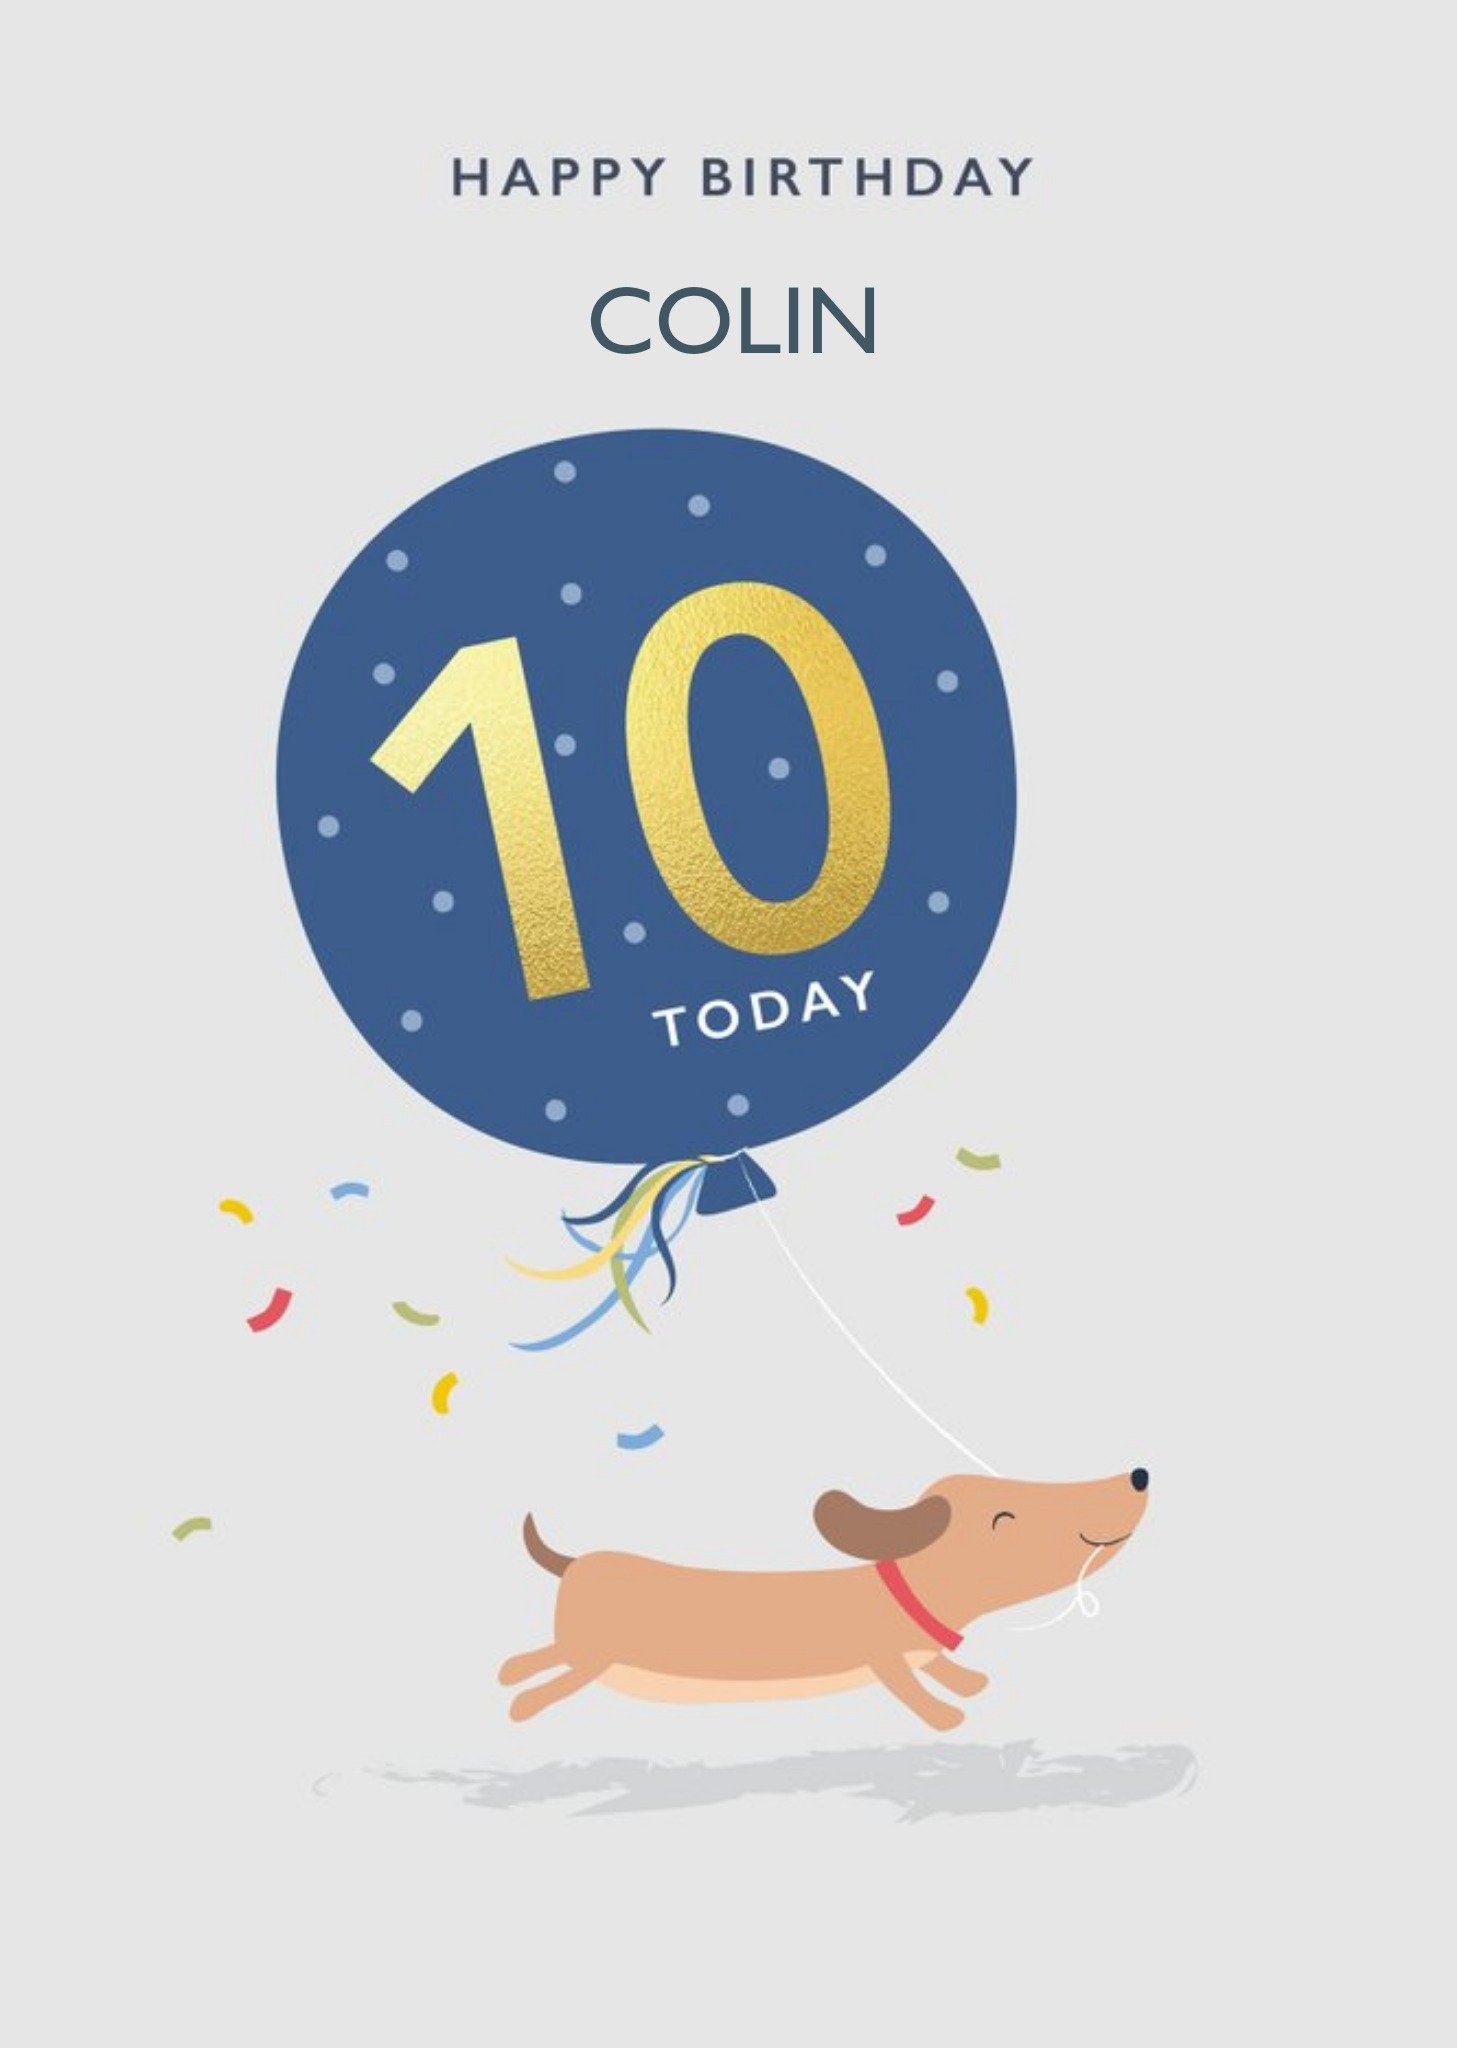 Moonpig Cute Sausage Dog Illustration Balloon 10 Today Male Birthday Card Ecard